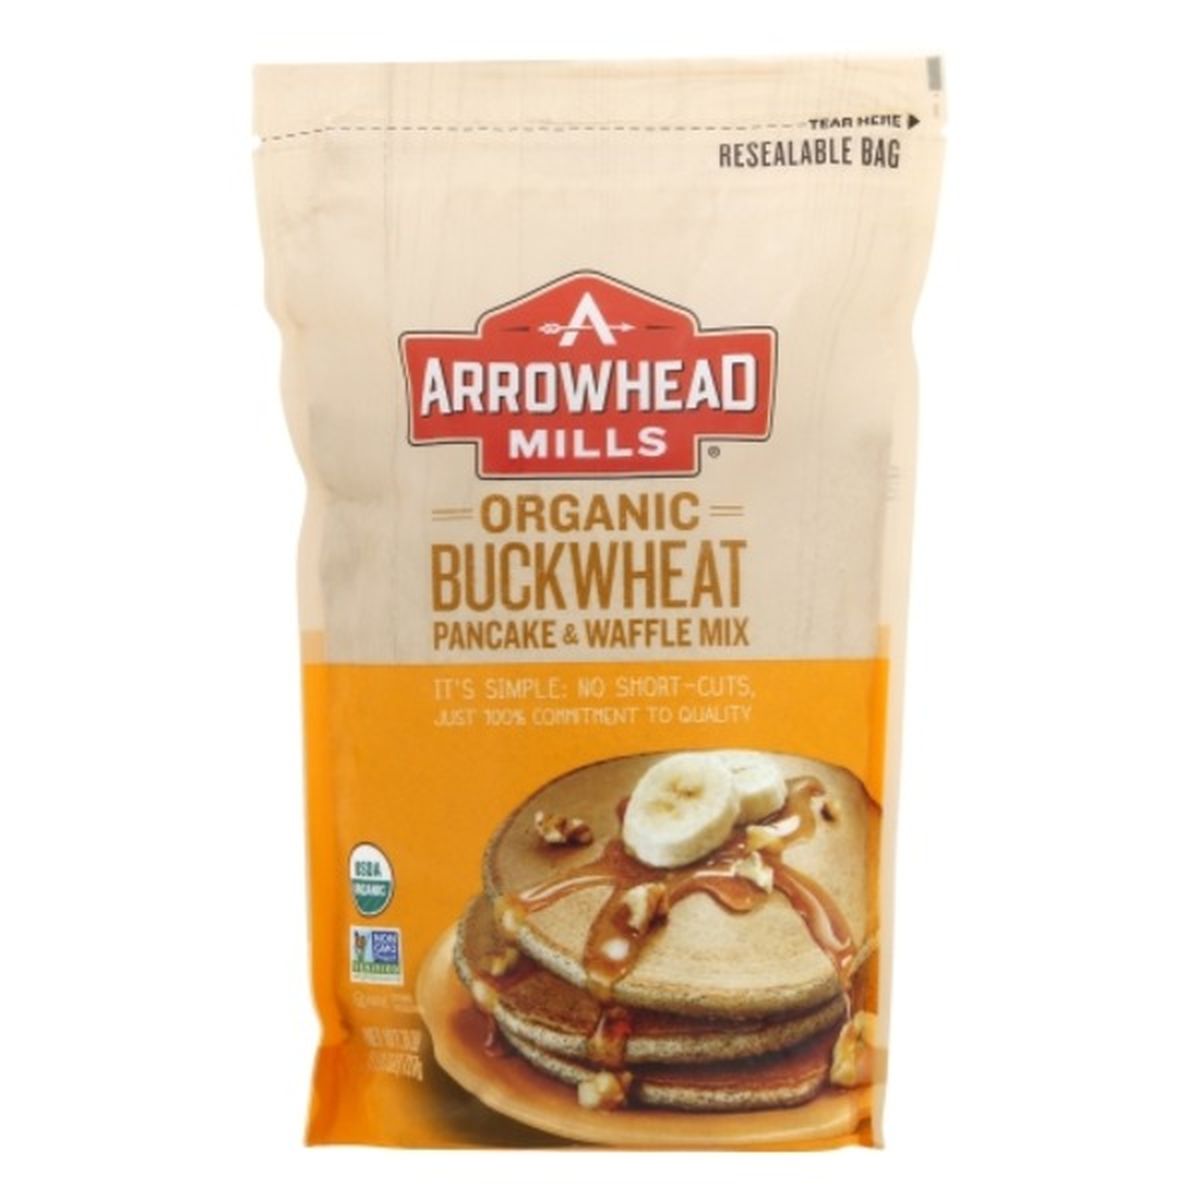 Calories in Arrowhead Mills Pancake & Waffle Mix, Organic, Buckwheat